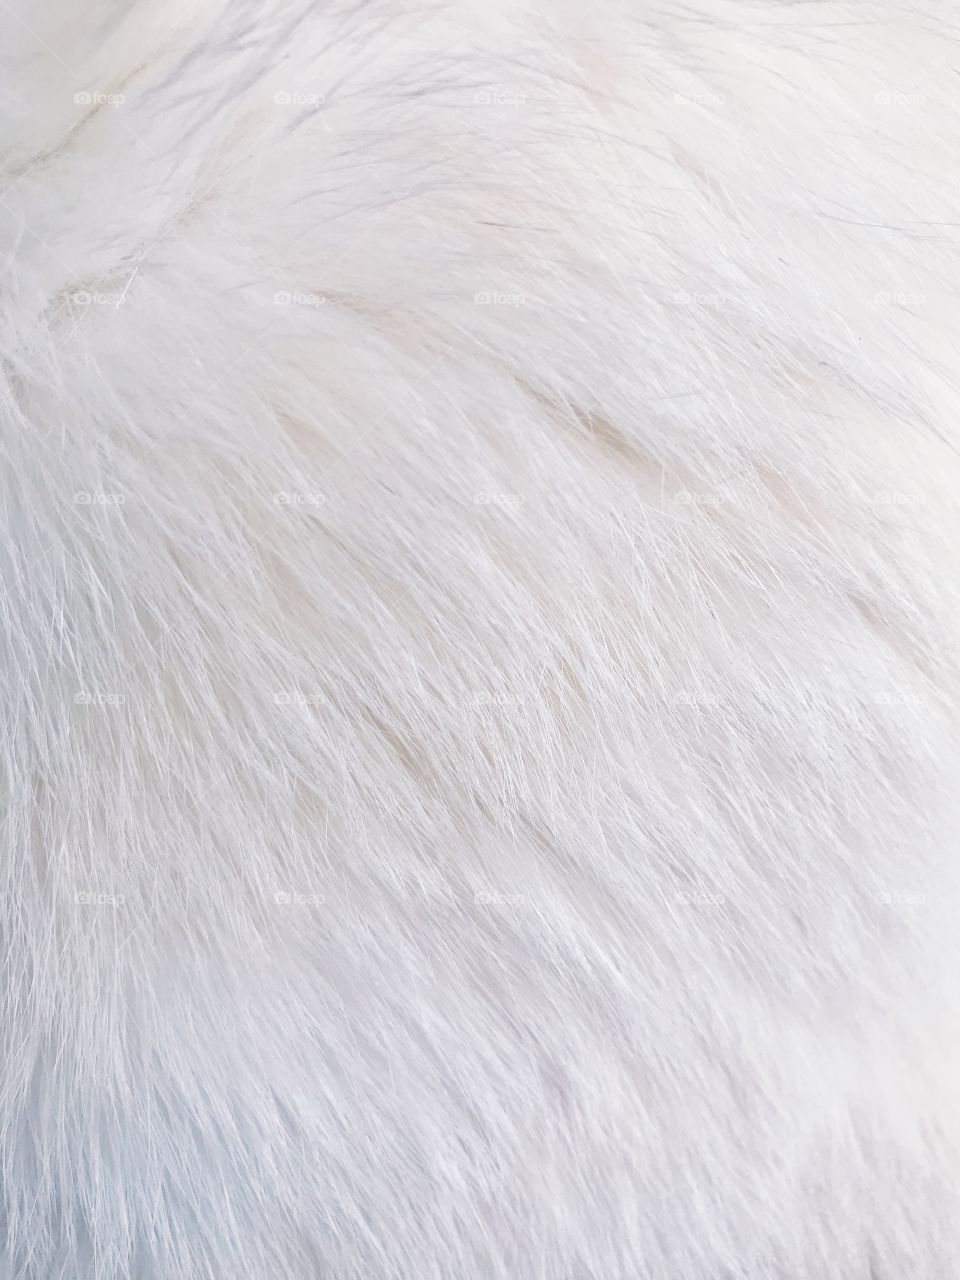 Fluffy White Animal Fur